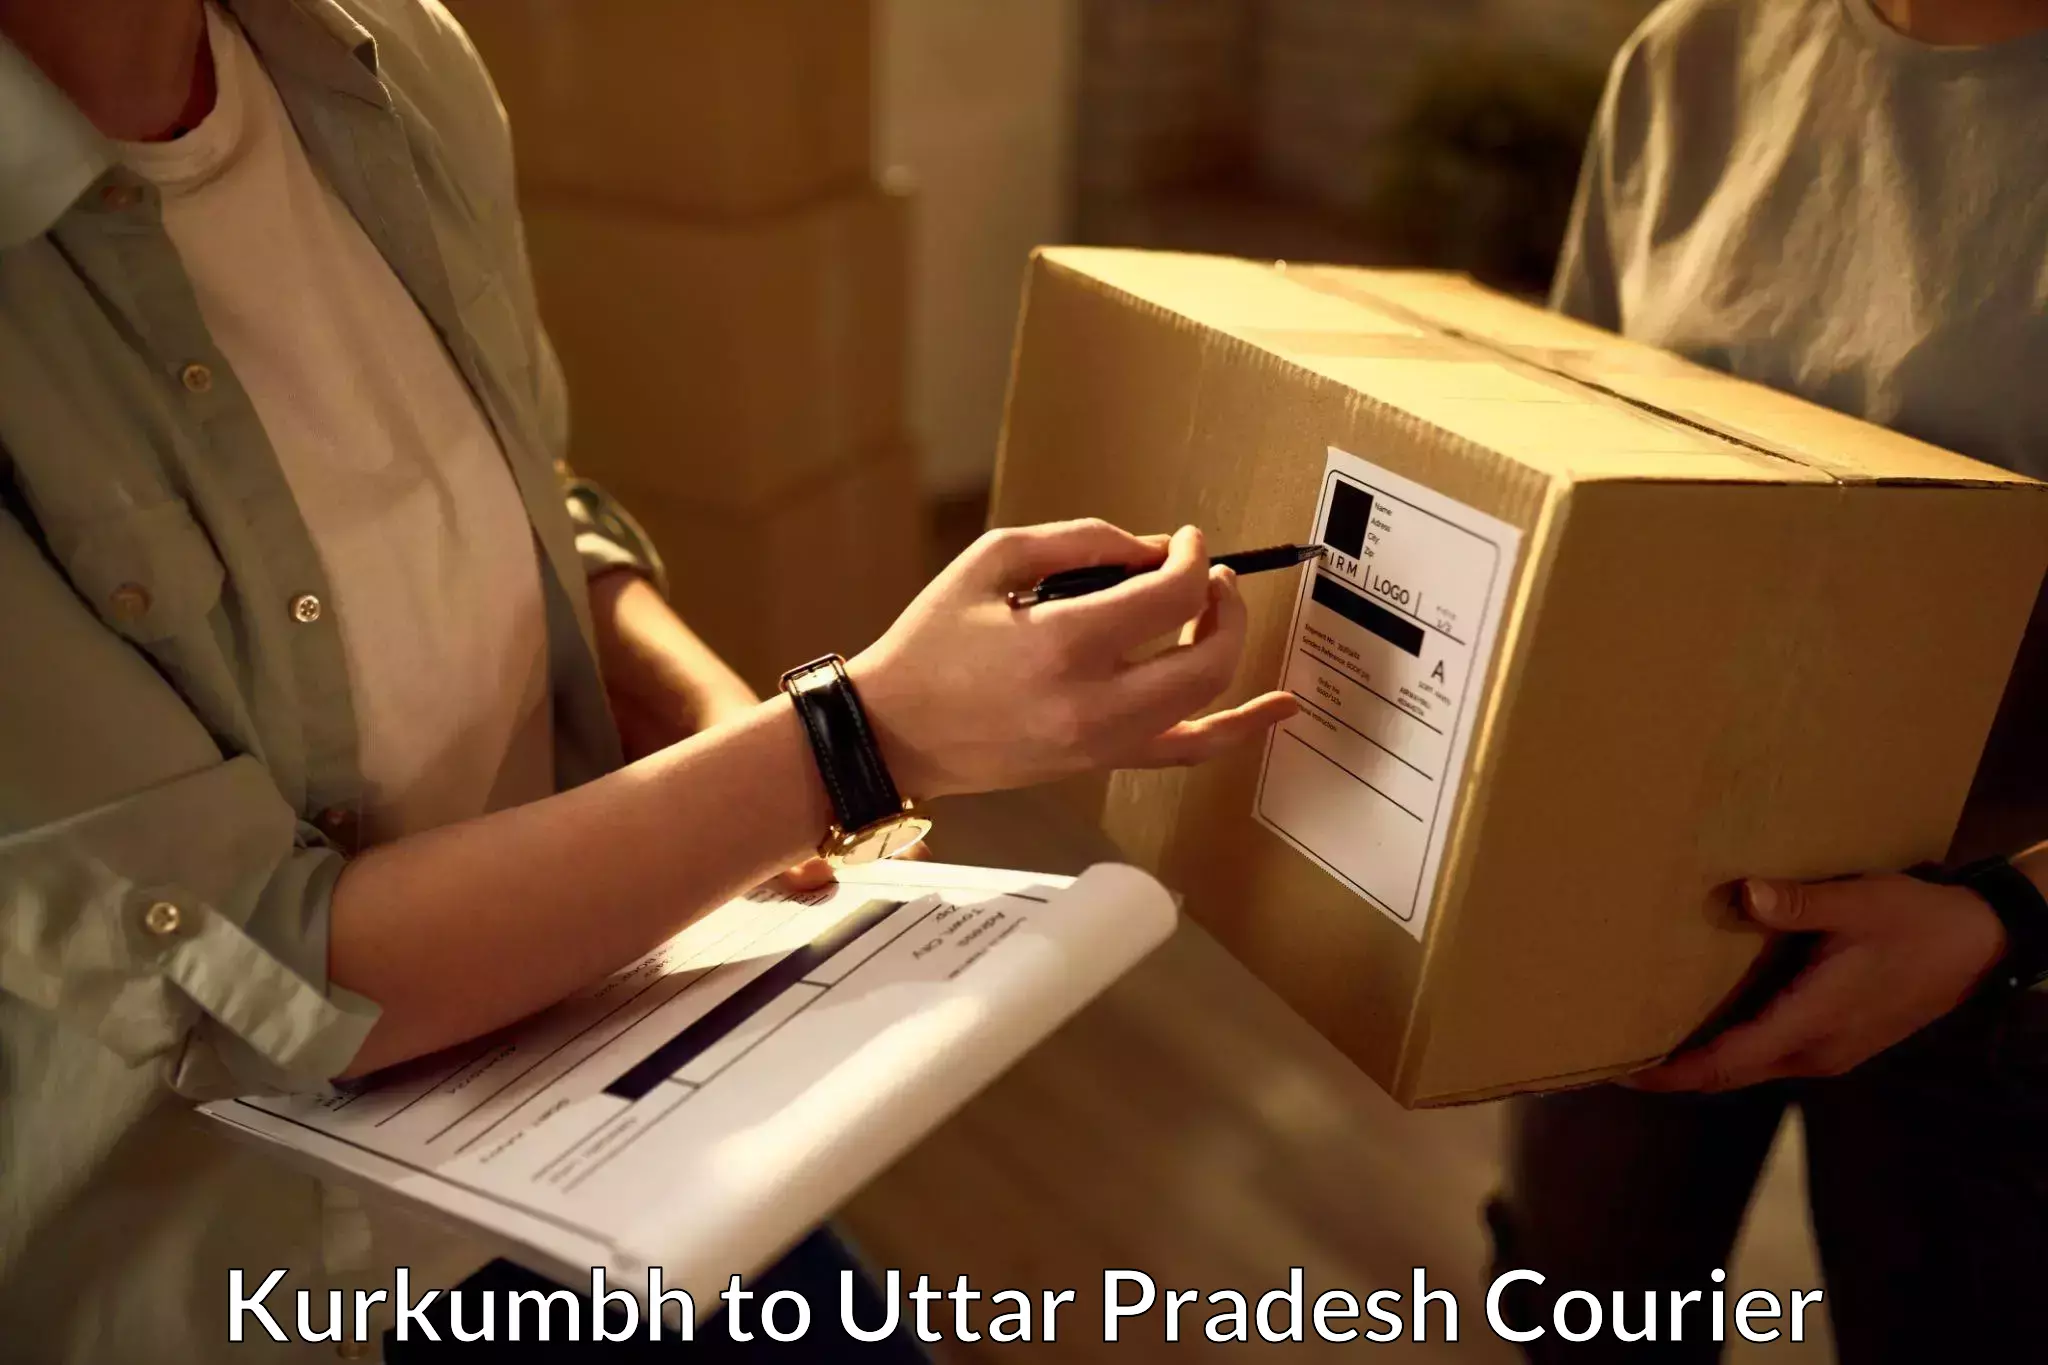 Personal parcel delivery in Kurkumbh to Dildar Nagar